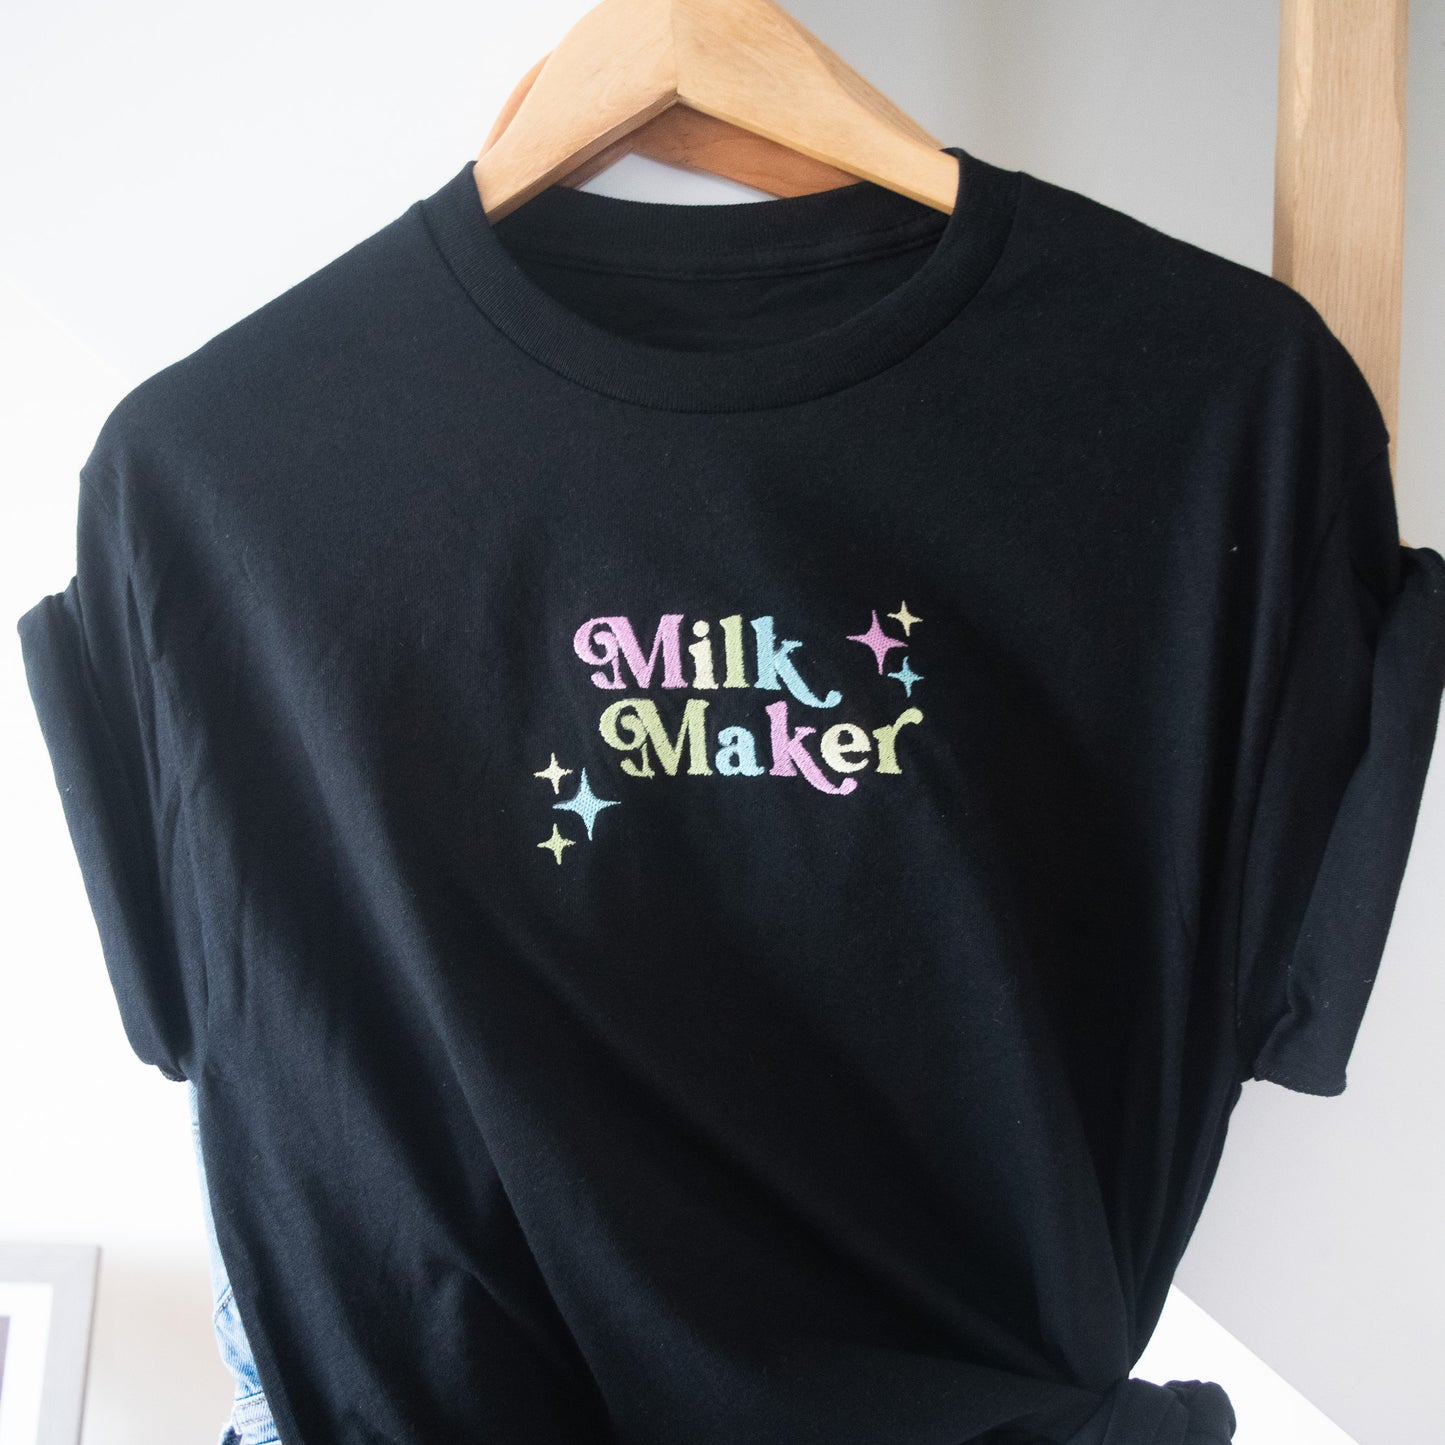 🌟 Empowerment Embroidered 'Milk Maker' Breastfeeding Awareness Top 🤱